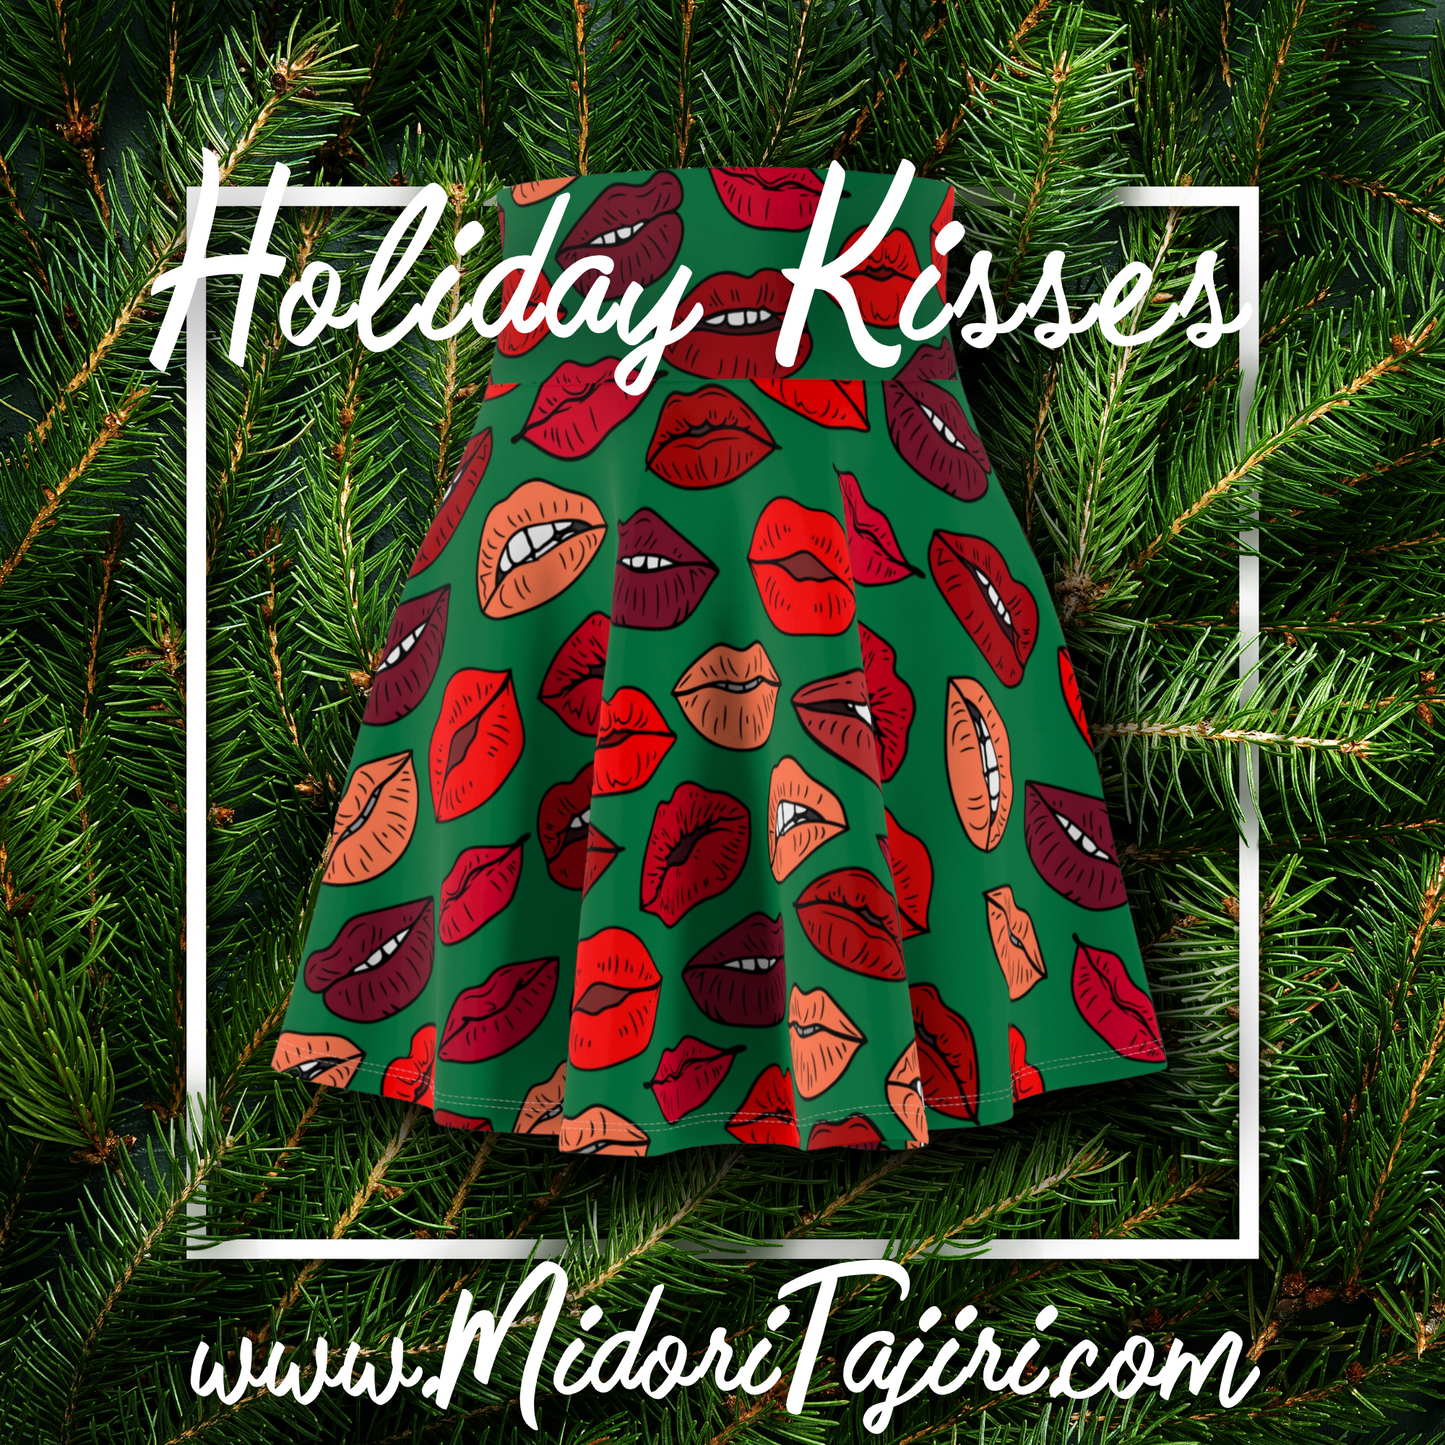 Retro Green Christmas Kisses Skater Skirt, Holiday Xmas Santa Baby Retro 90s Y2K Costume Cosplay, Valentine Red Lips Kiss Girlfriend Gift